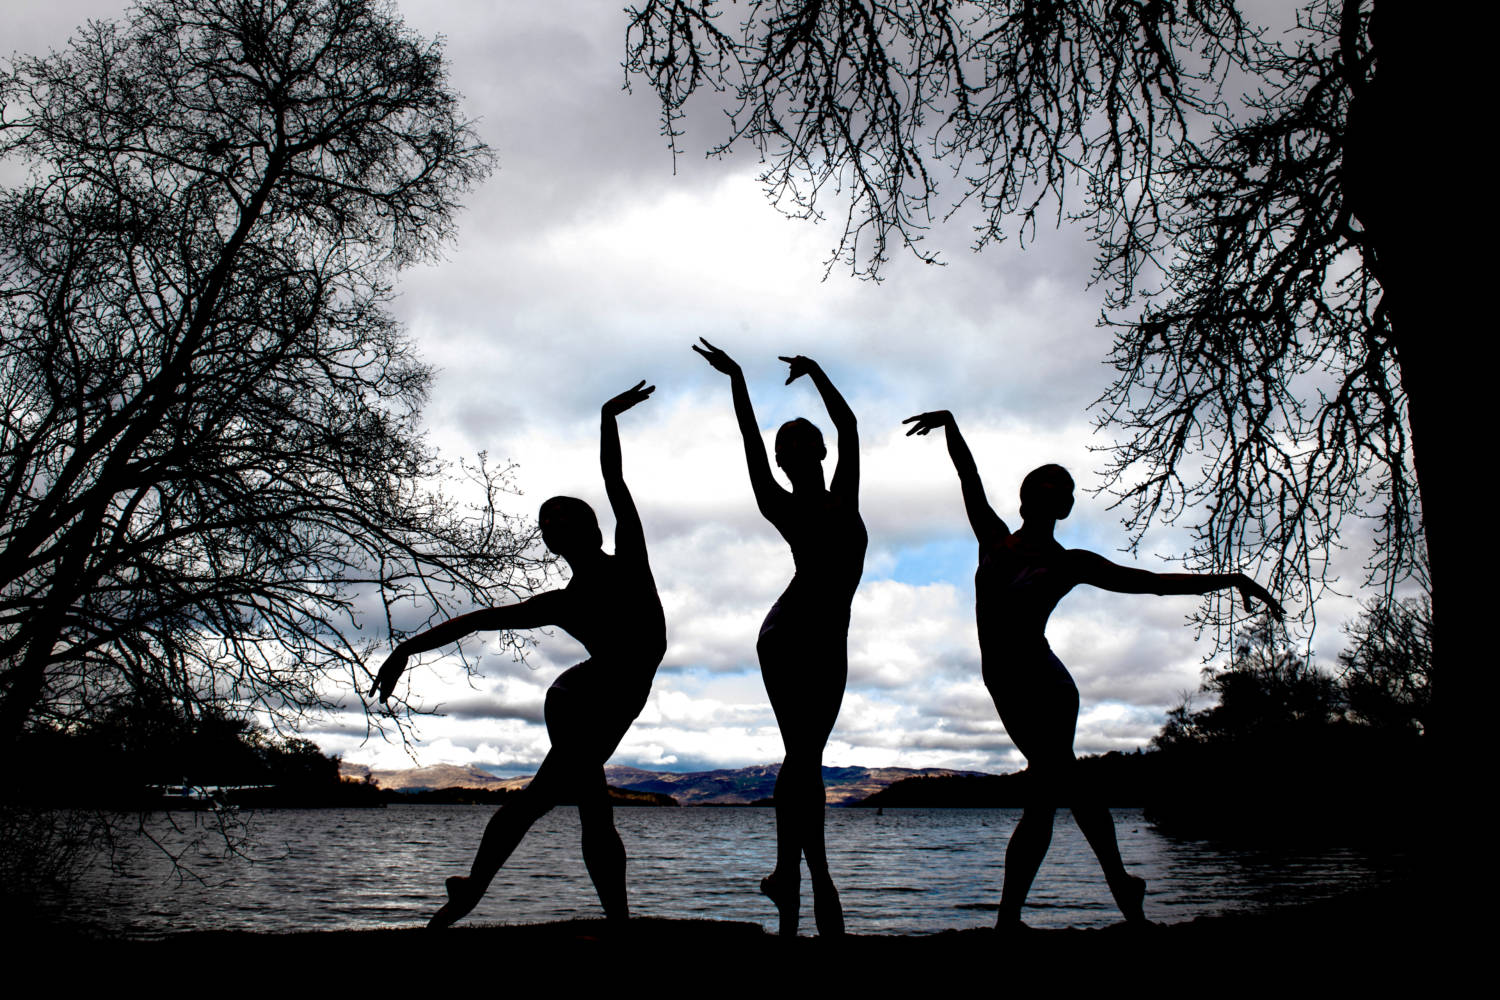 Scottish Ballet Dancers Perform On The Banks Of Loch Lomond, Scotland